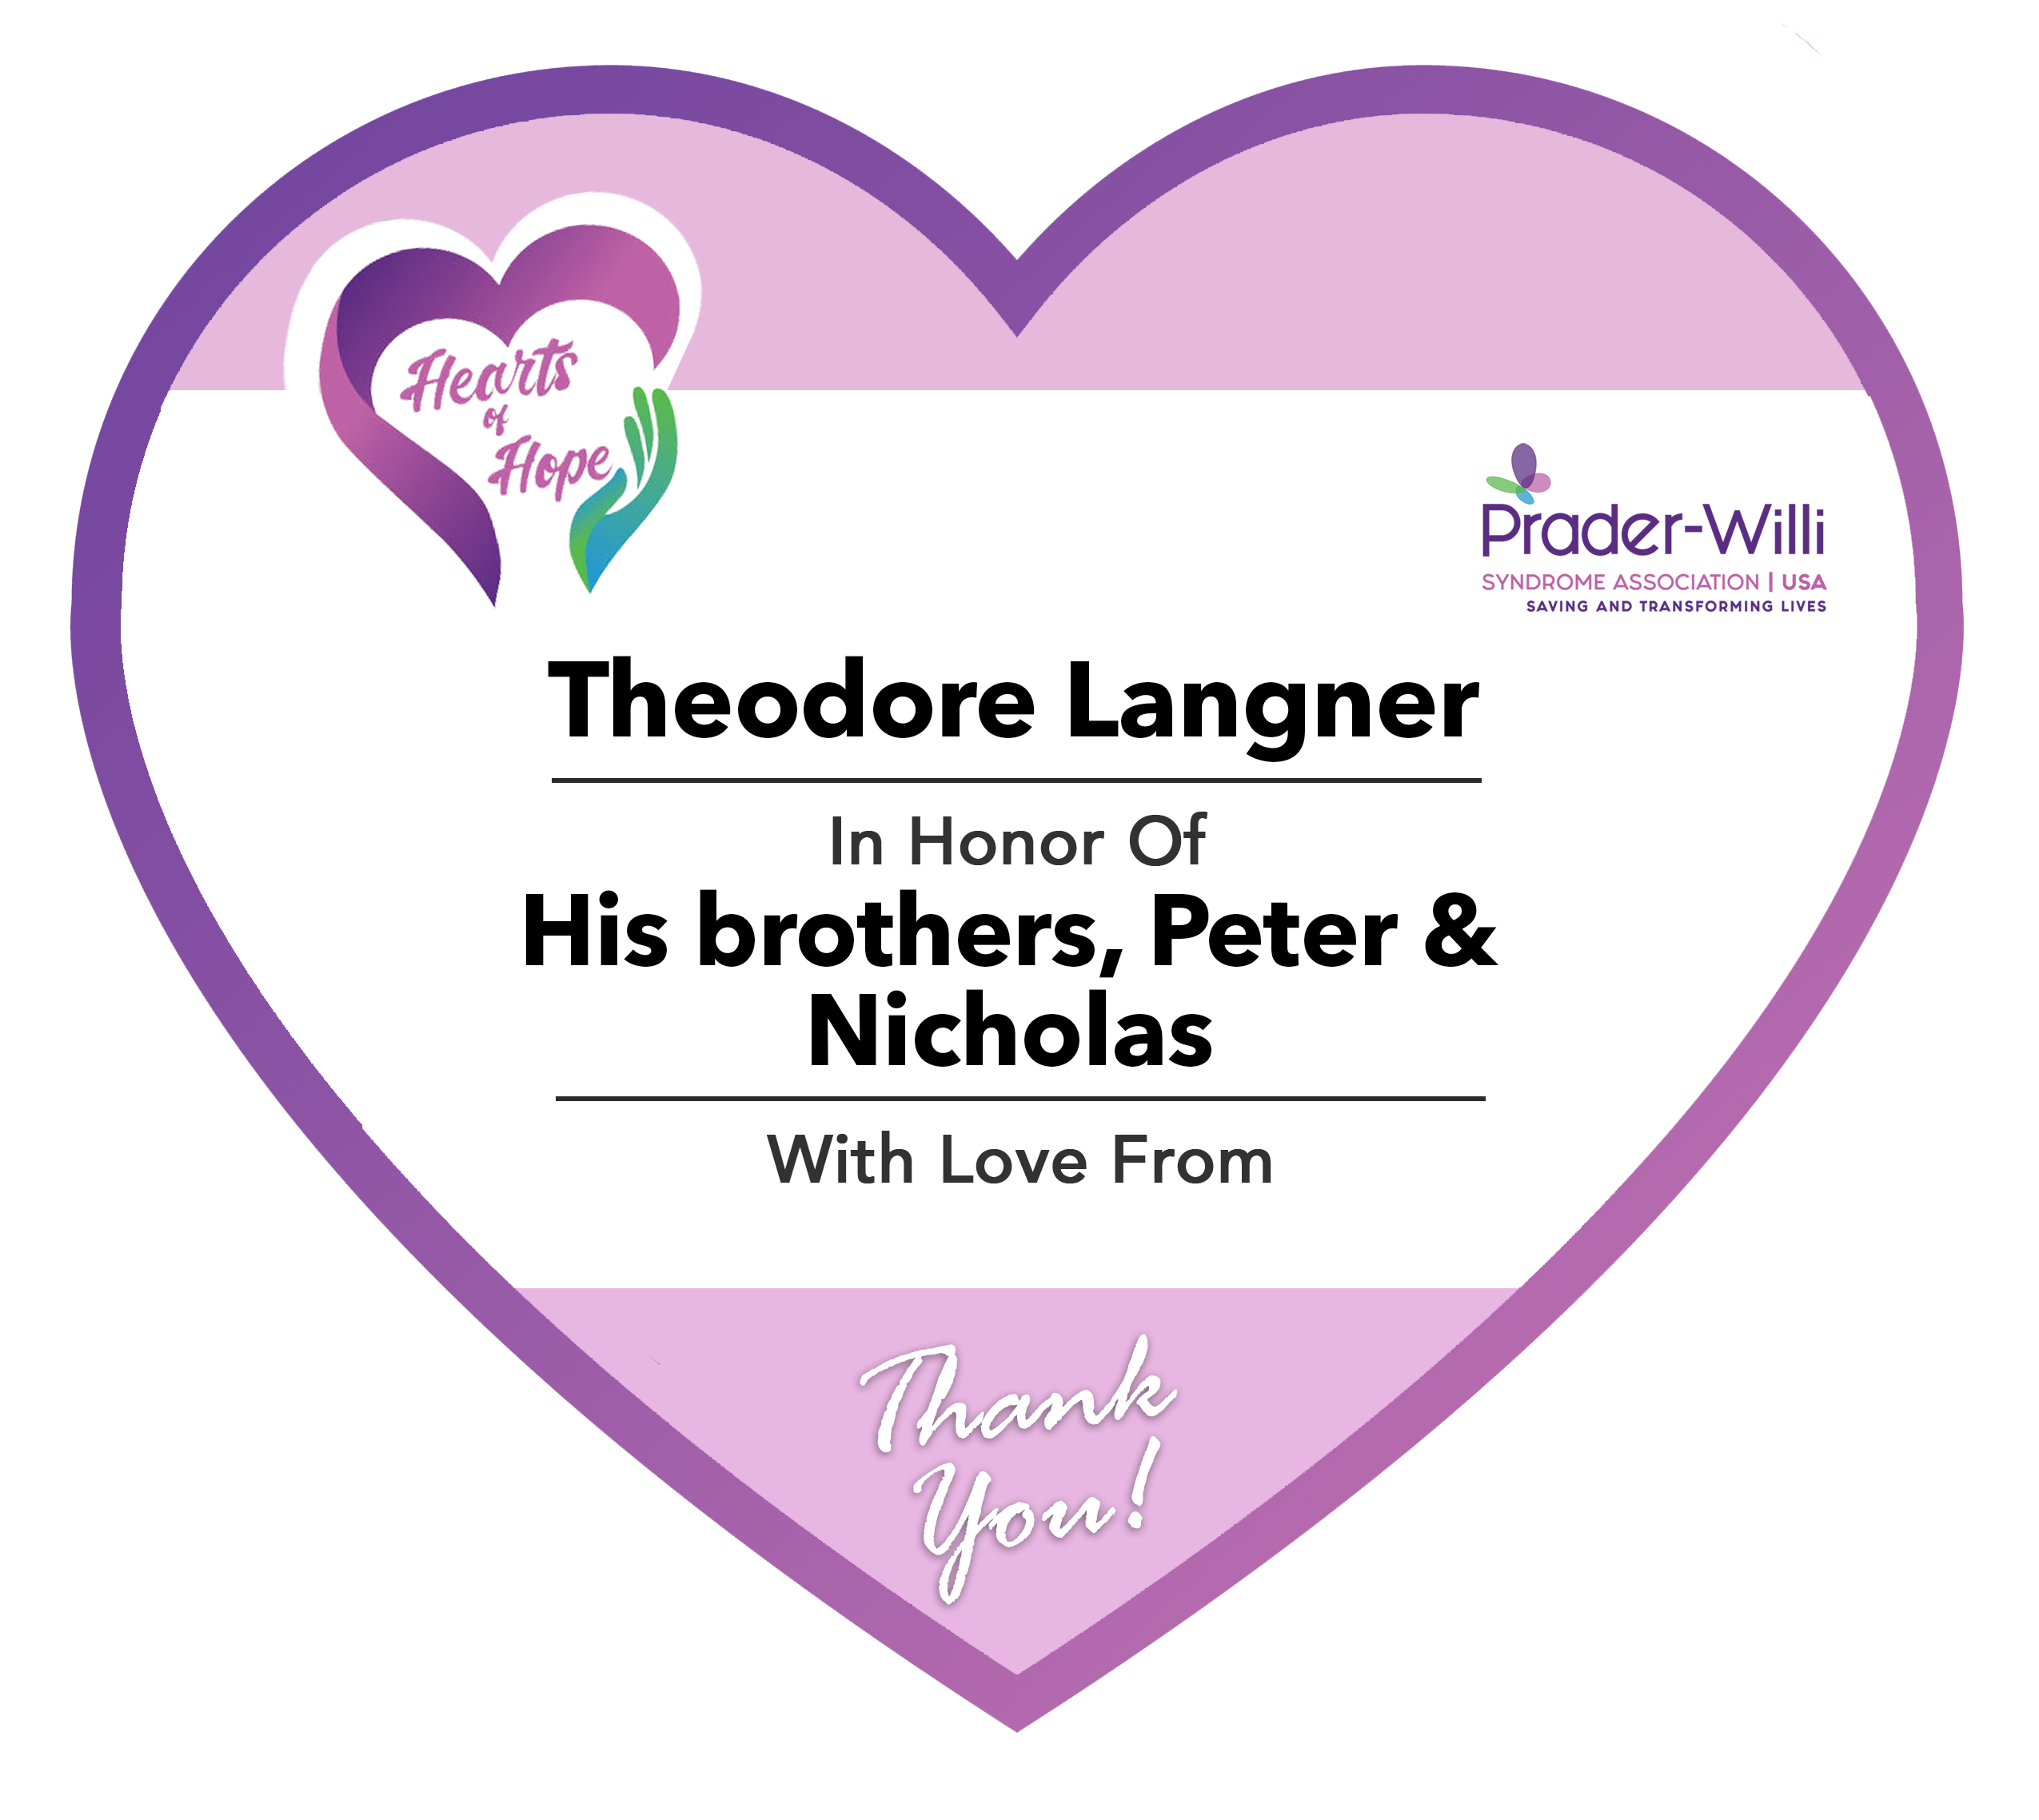 PWSA Paperheart TheodoreLangner, Prader-Willi Syndrome Association | USA